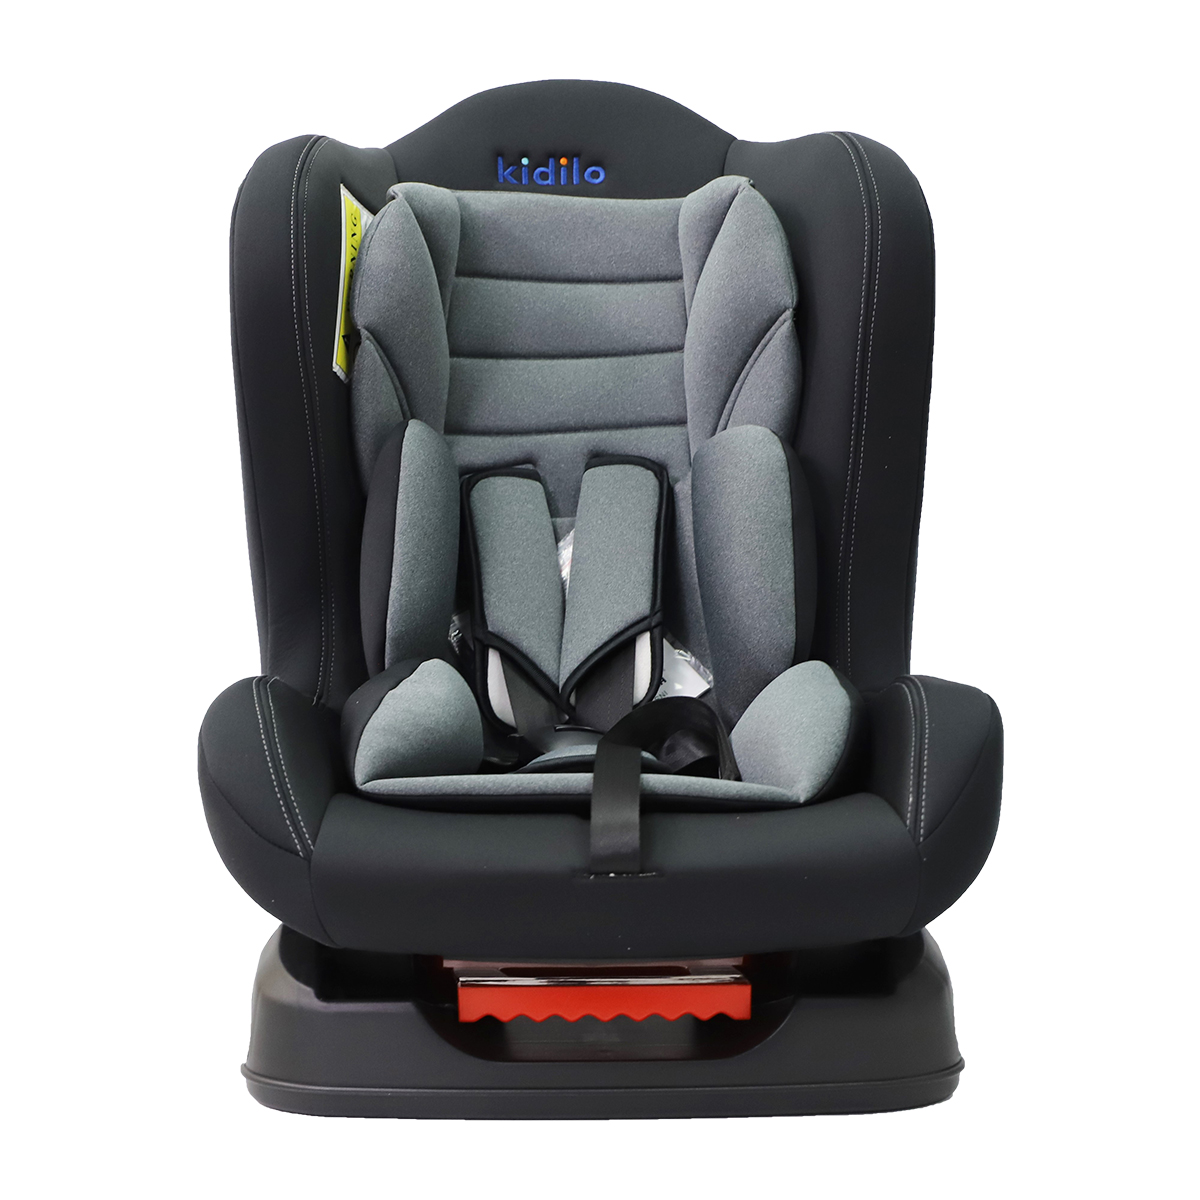 Kidilo Baby Car Seat - Black&Grey